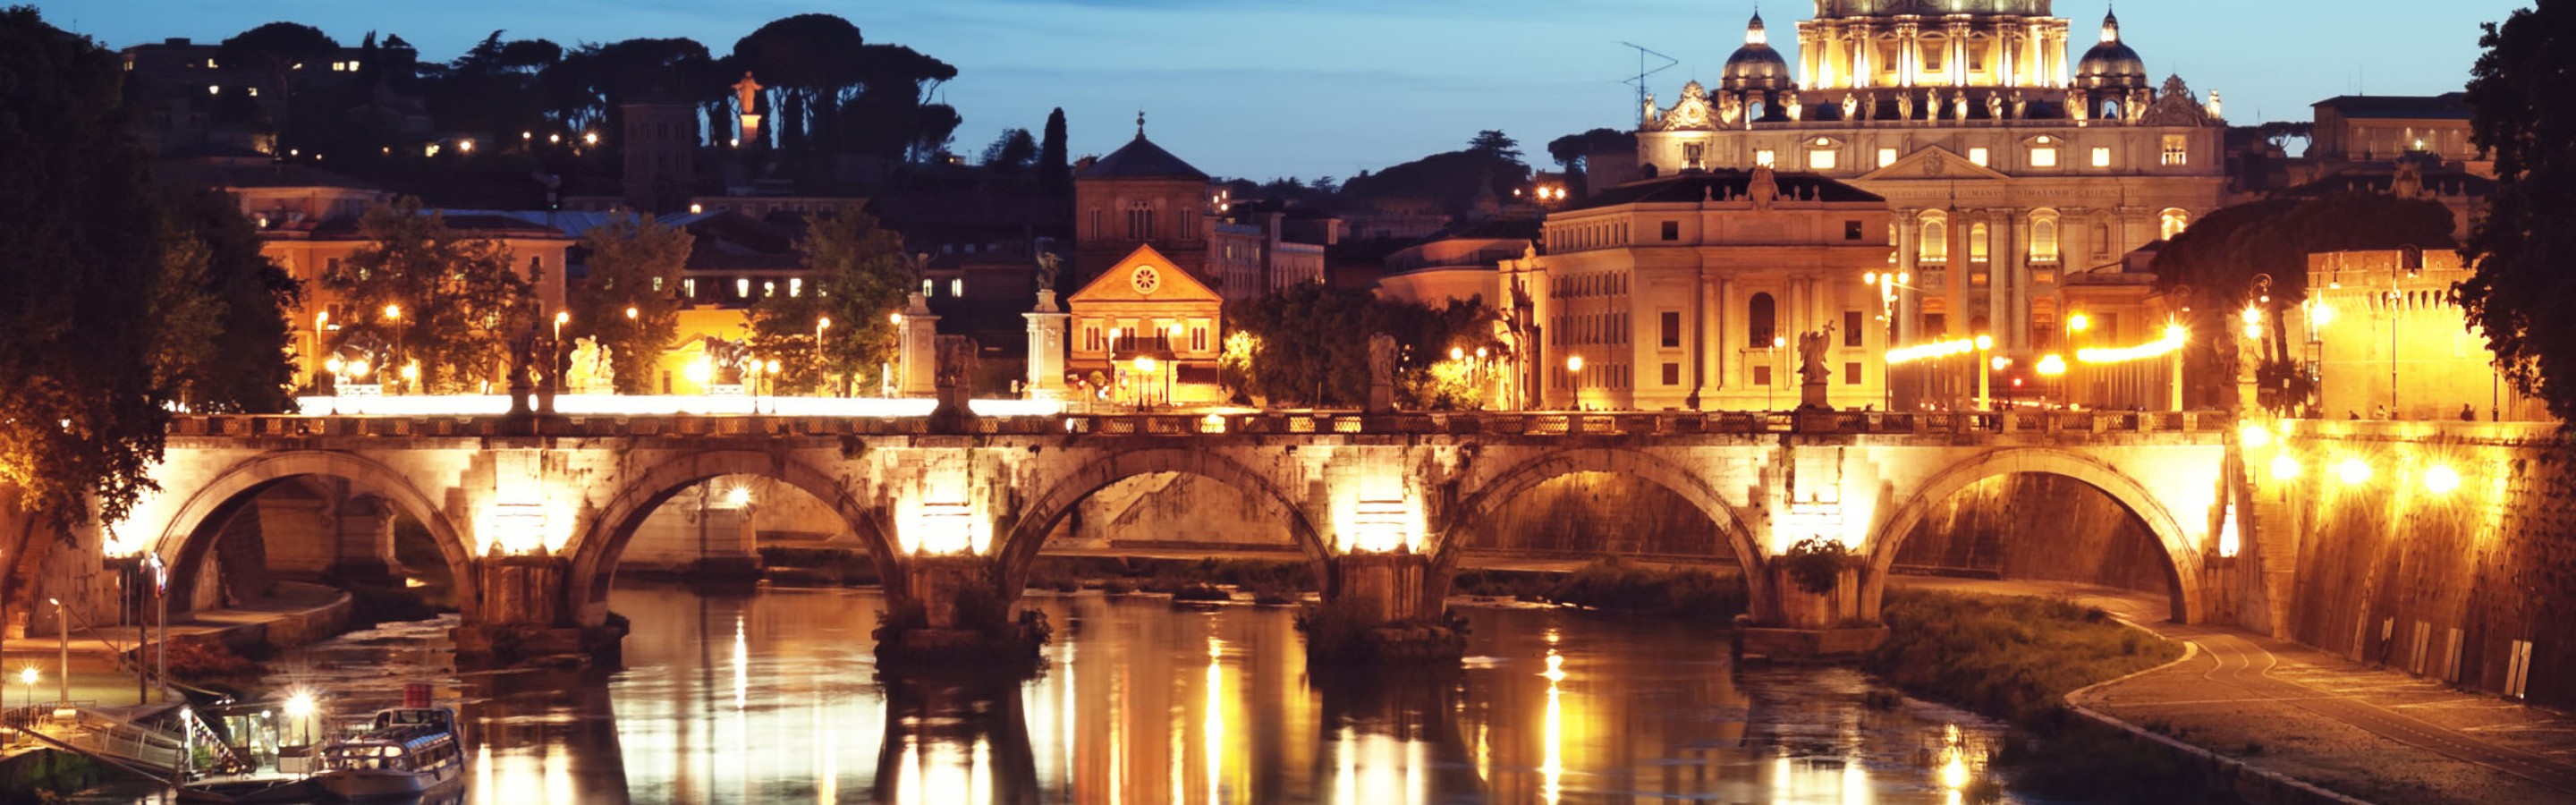 Rome Bridge 2880x900